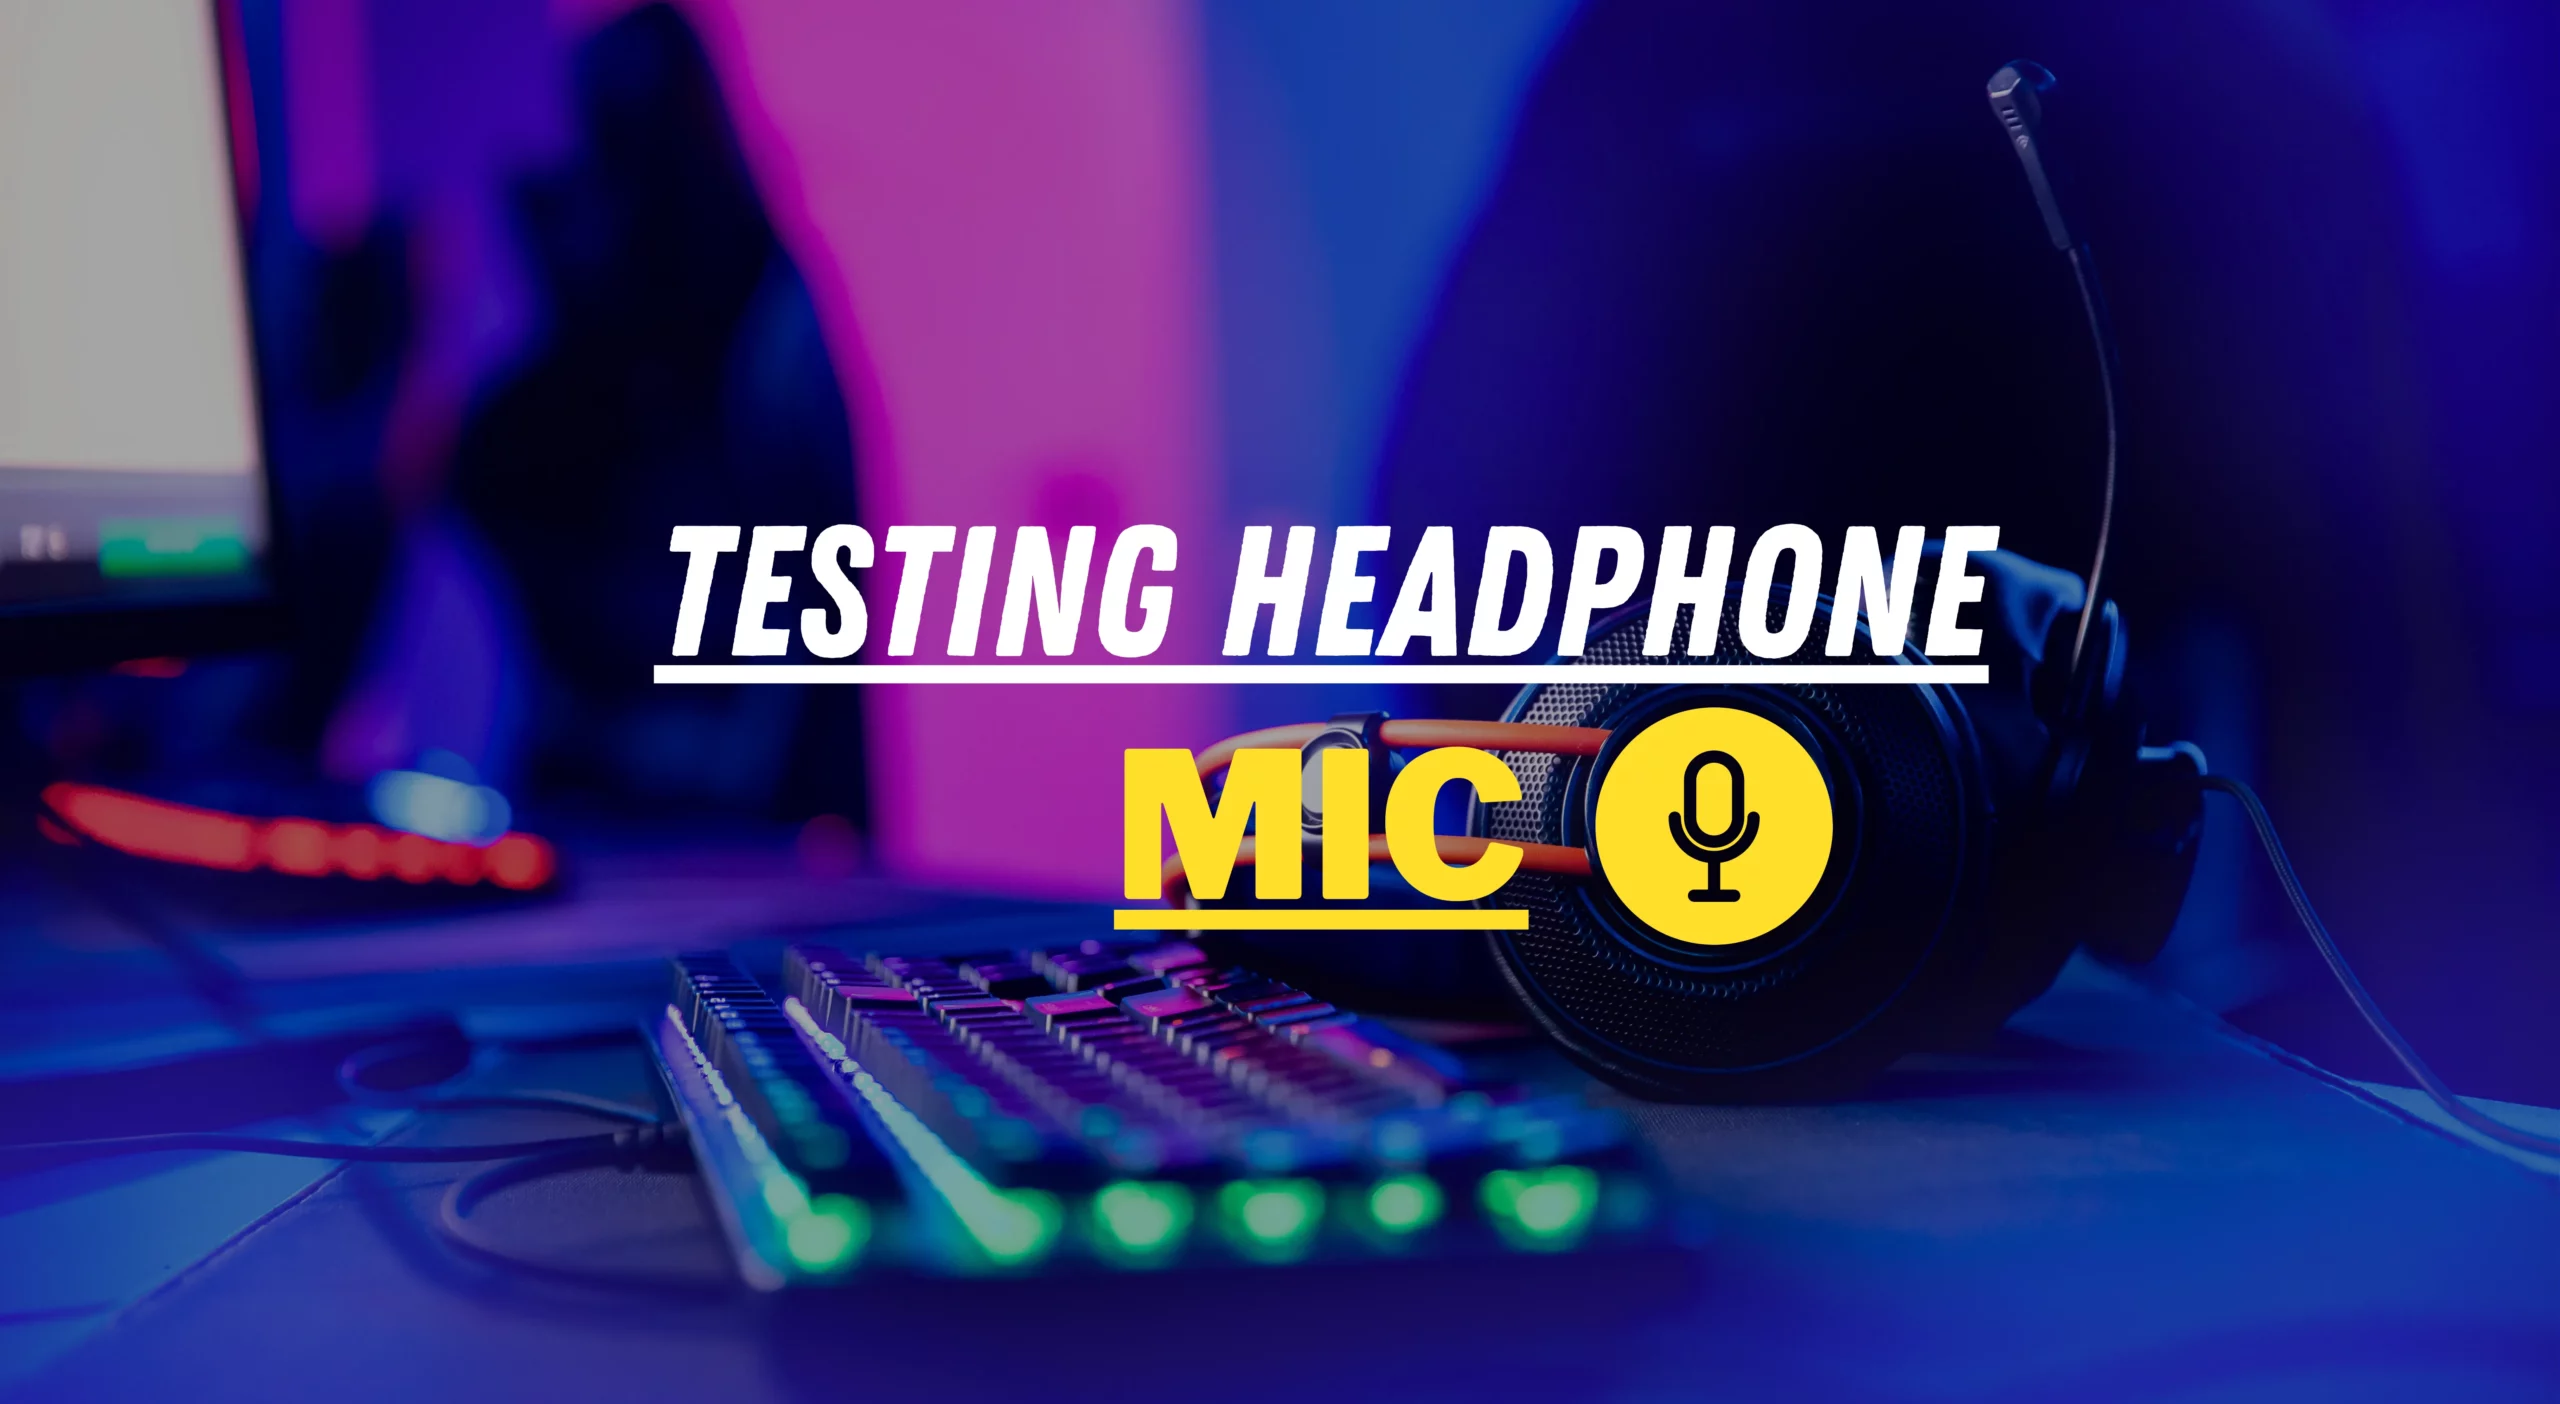 How To Test Headphone Mic